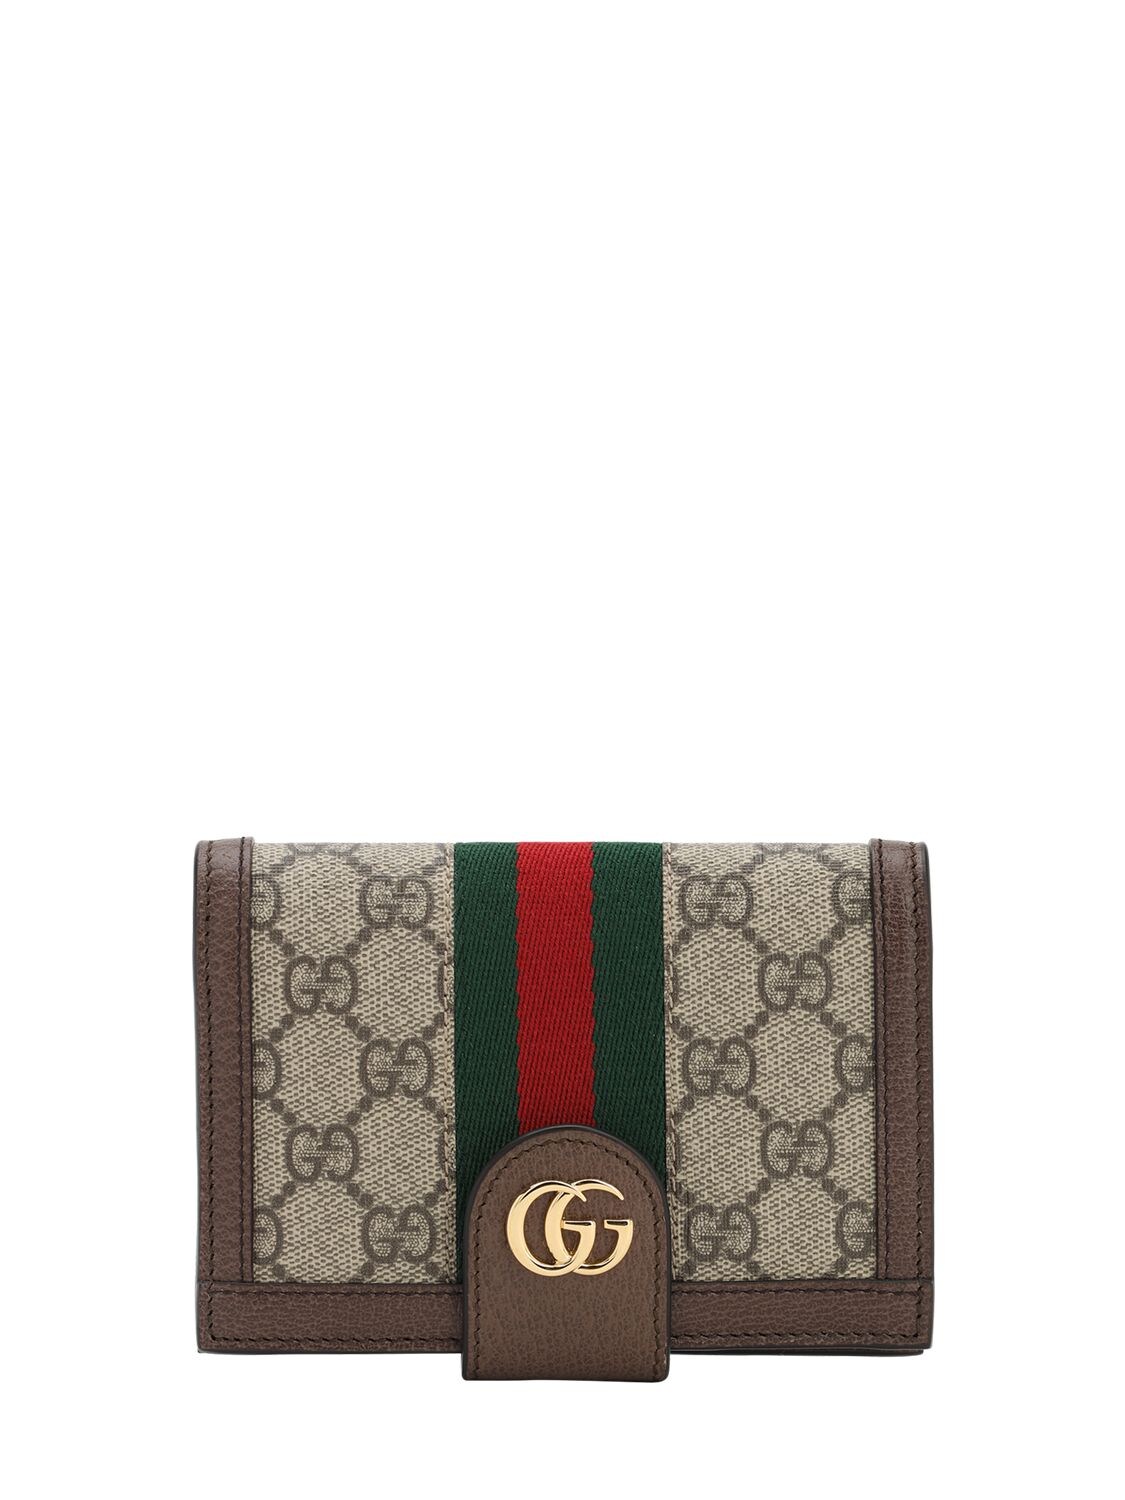 Gucci Gg Supreme Passport Holder